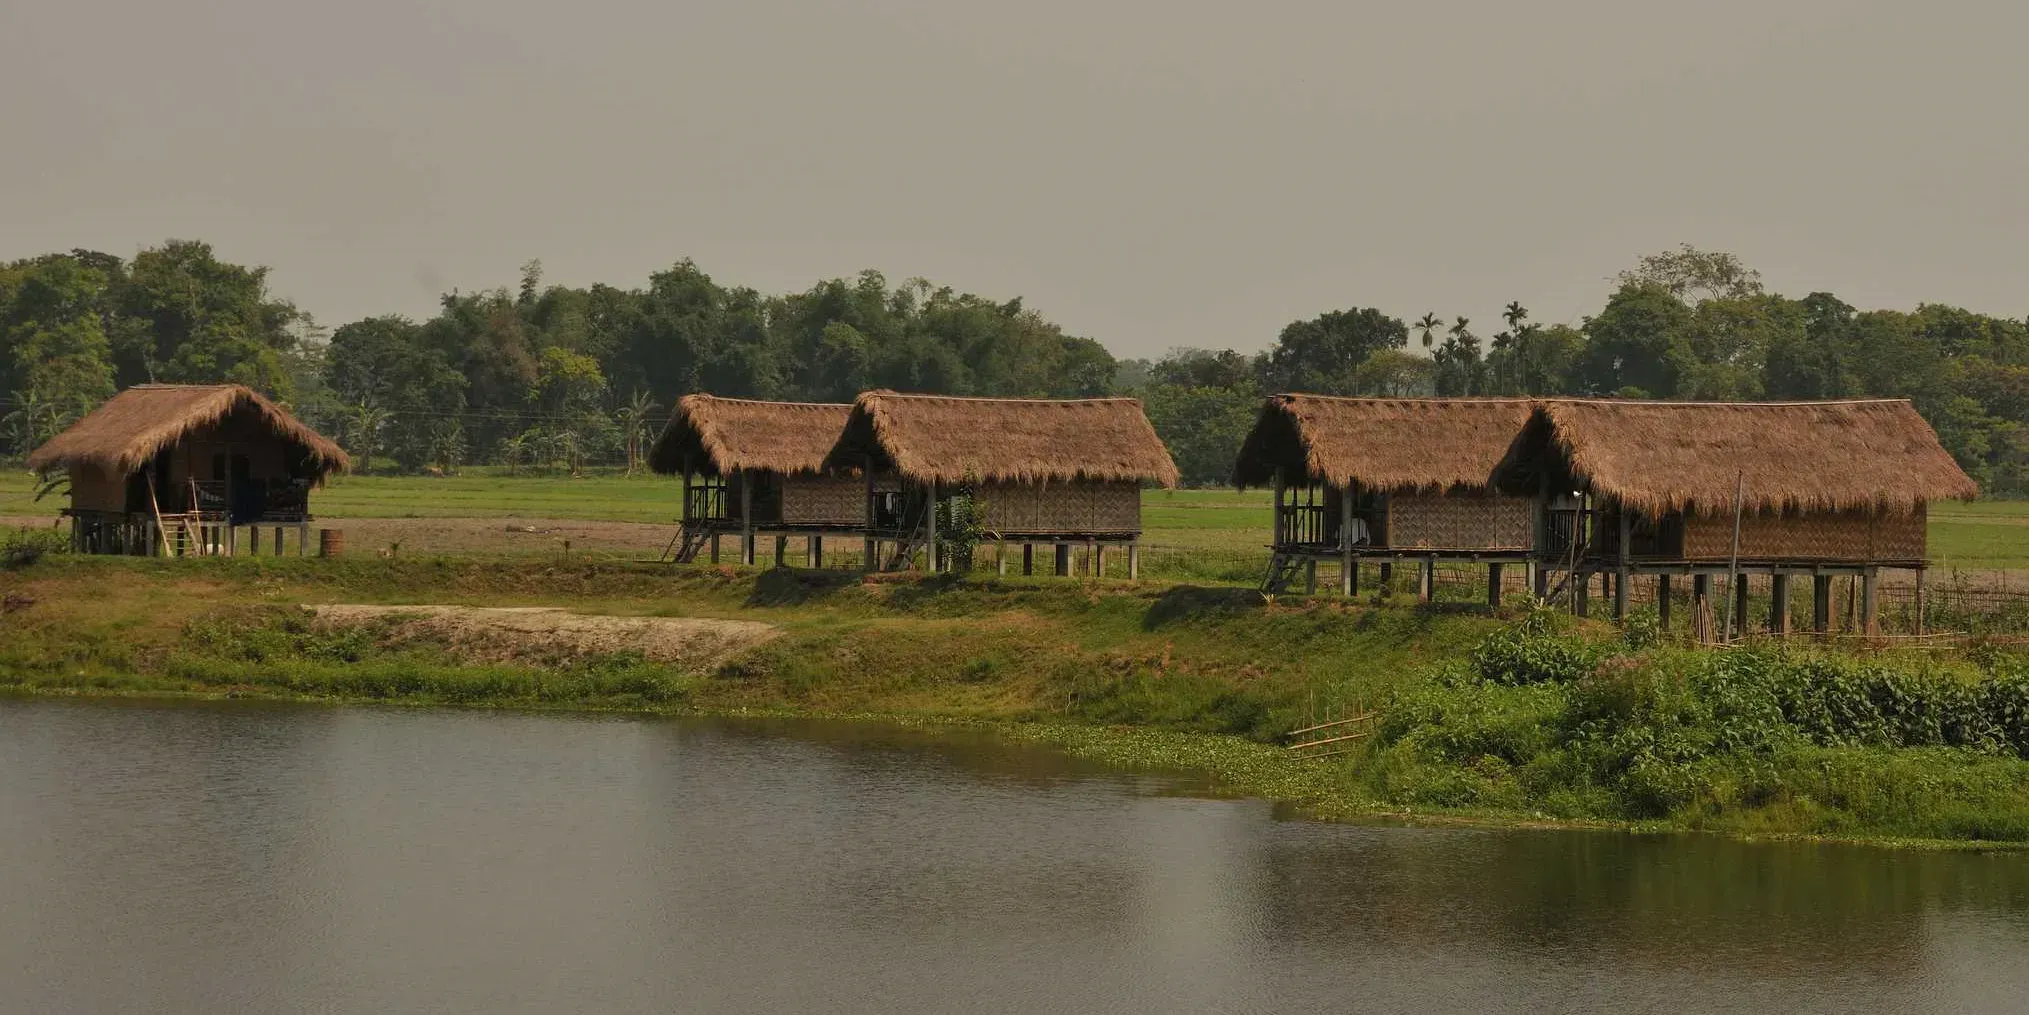 Bambo houses